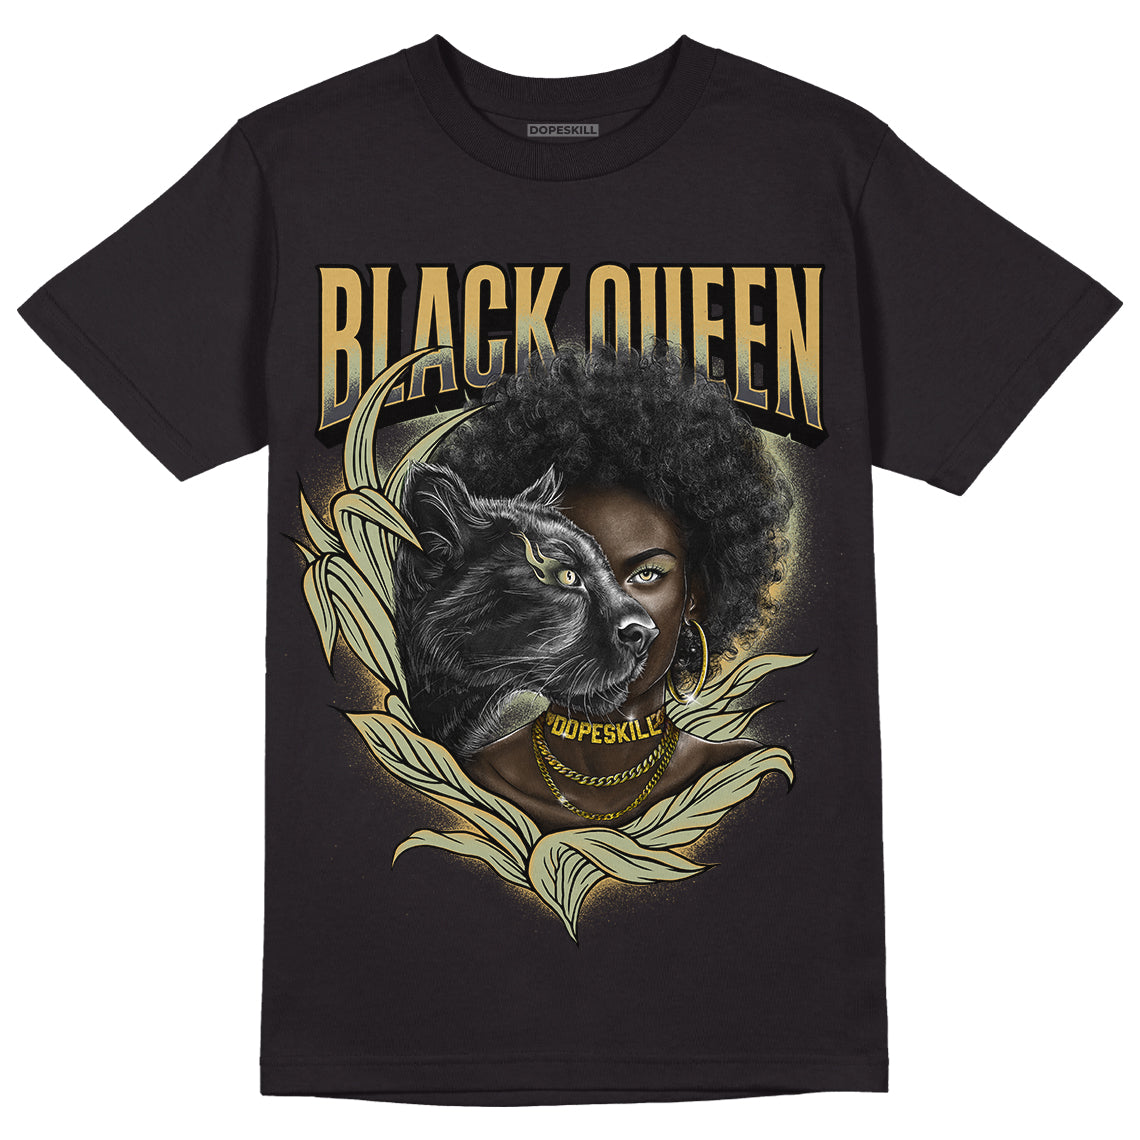 Jade Horizon 5s DopeSkill T-Shirt New Black Queen Graphic - Black